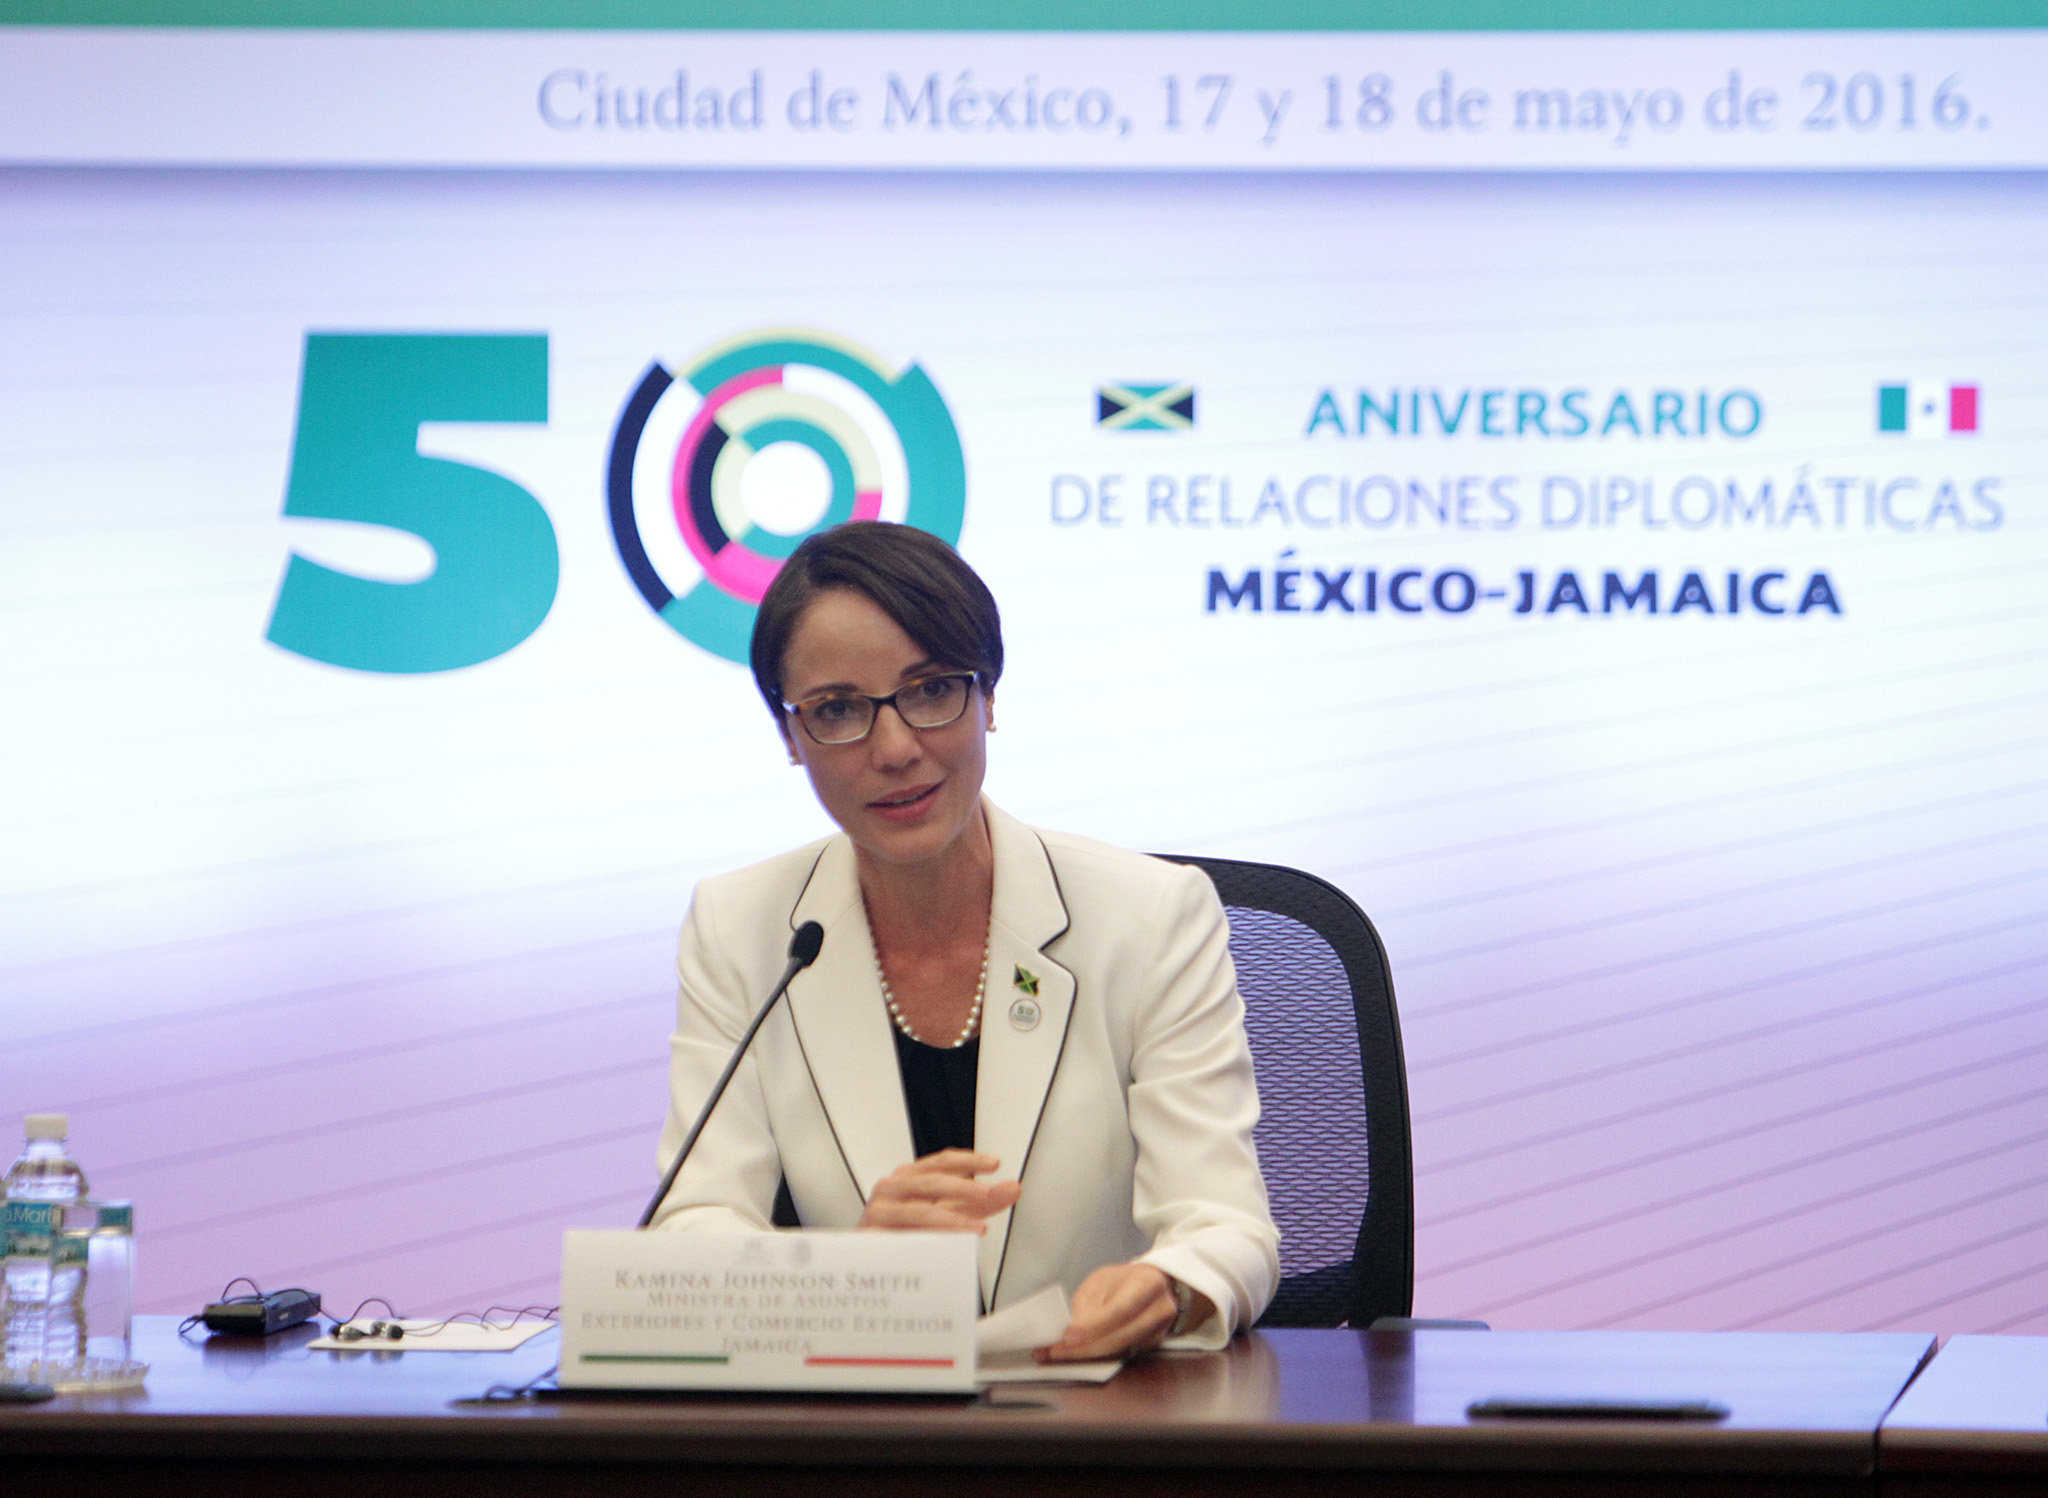 VIII Reunión de la Comisión Binacional Permanente México-Jamaica.